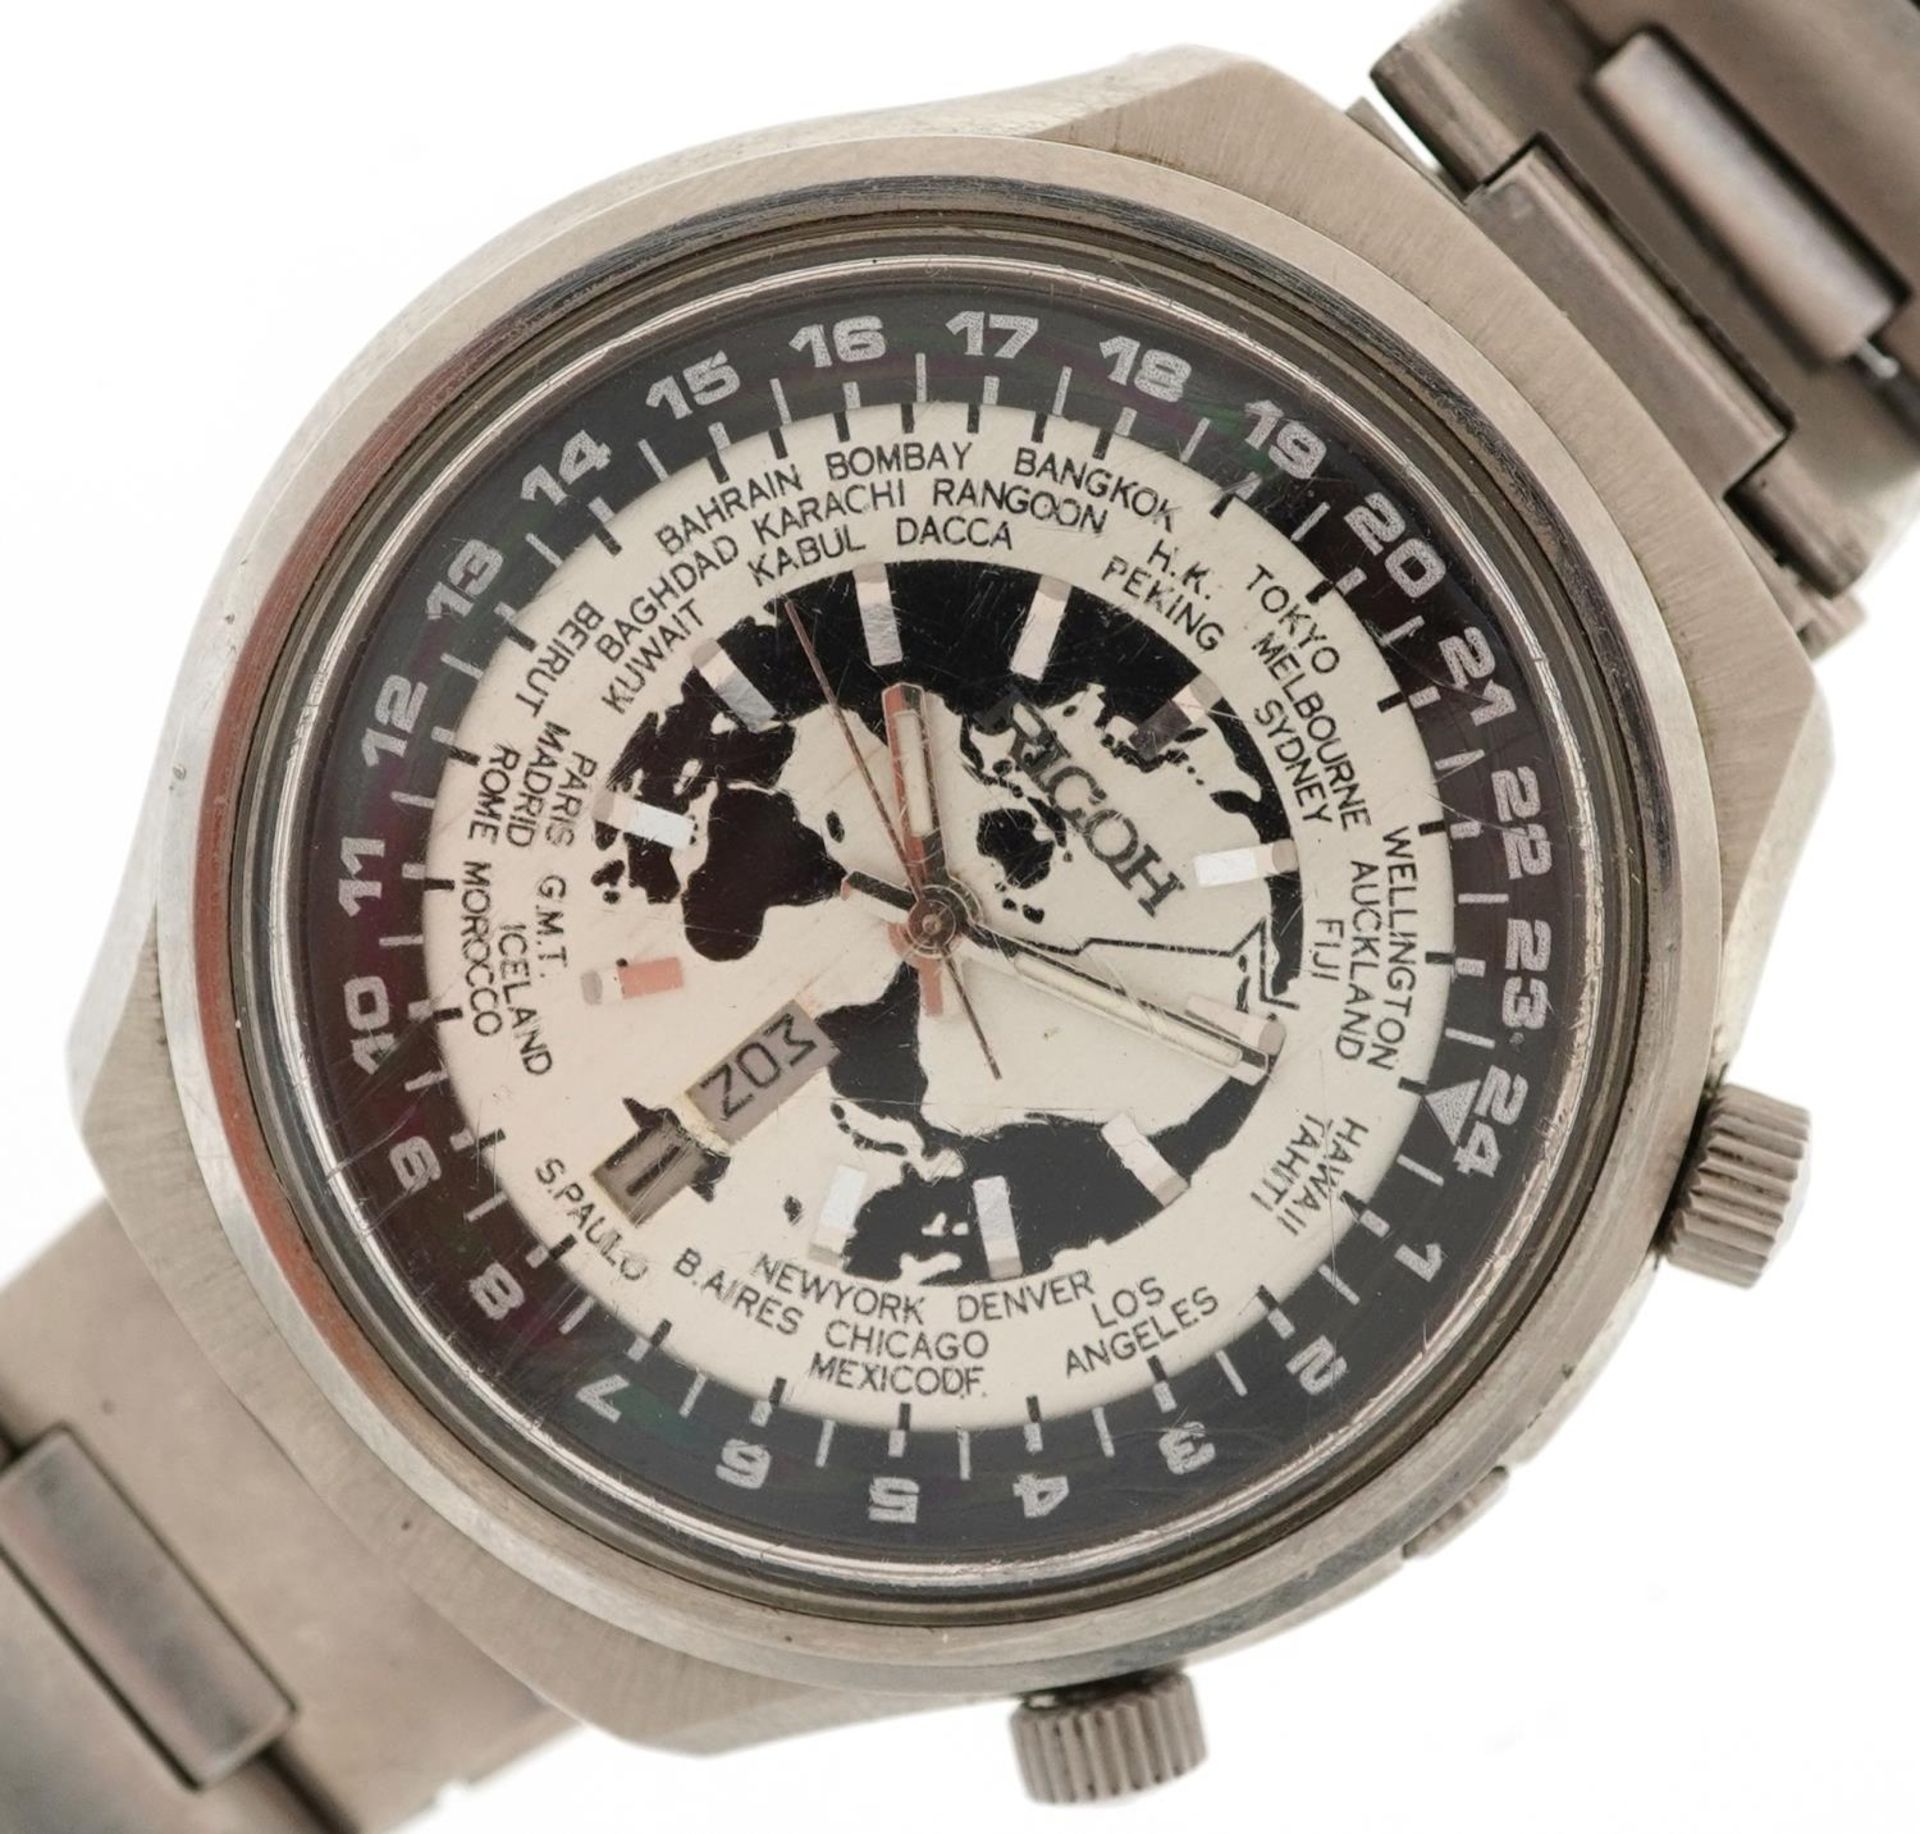 Ricoh, gentlemen's Ricoh World Time calendar chronograph automatic wristwatch, serial number